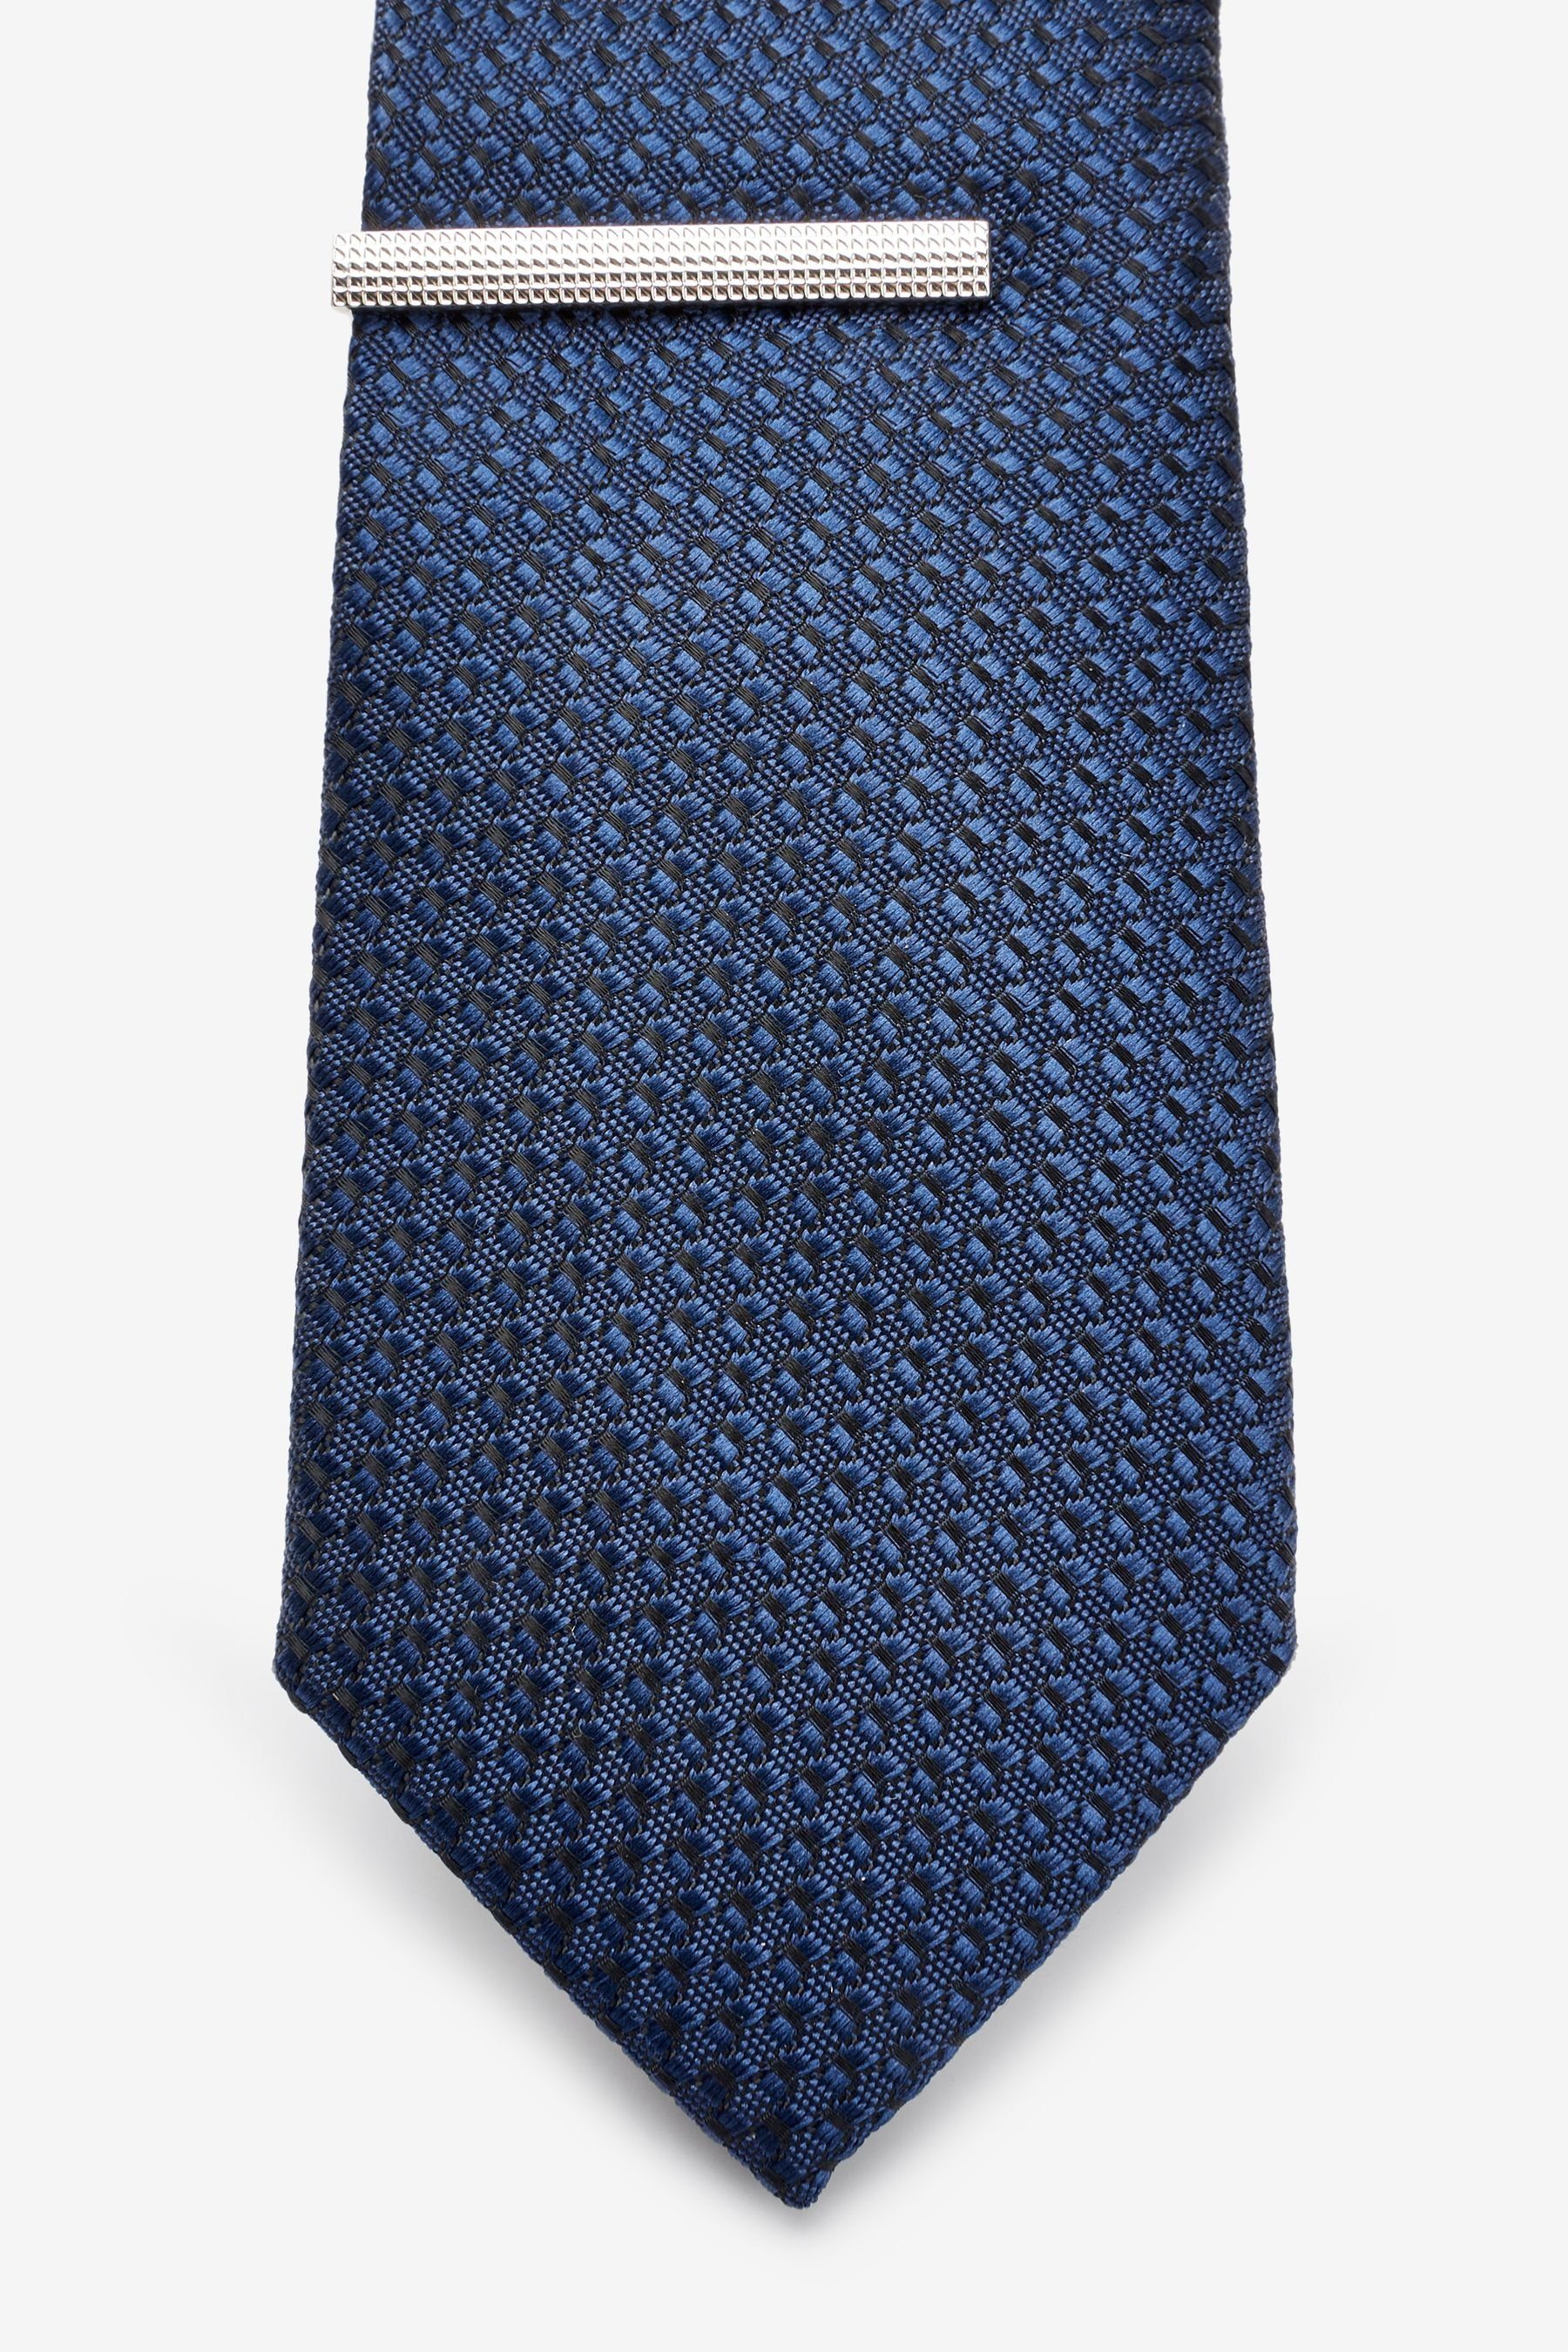 Next Krawatte Schmale Krawatte + Recyclingpolyester Navy Blue Klammer aus (2-St)